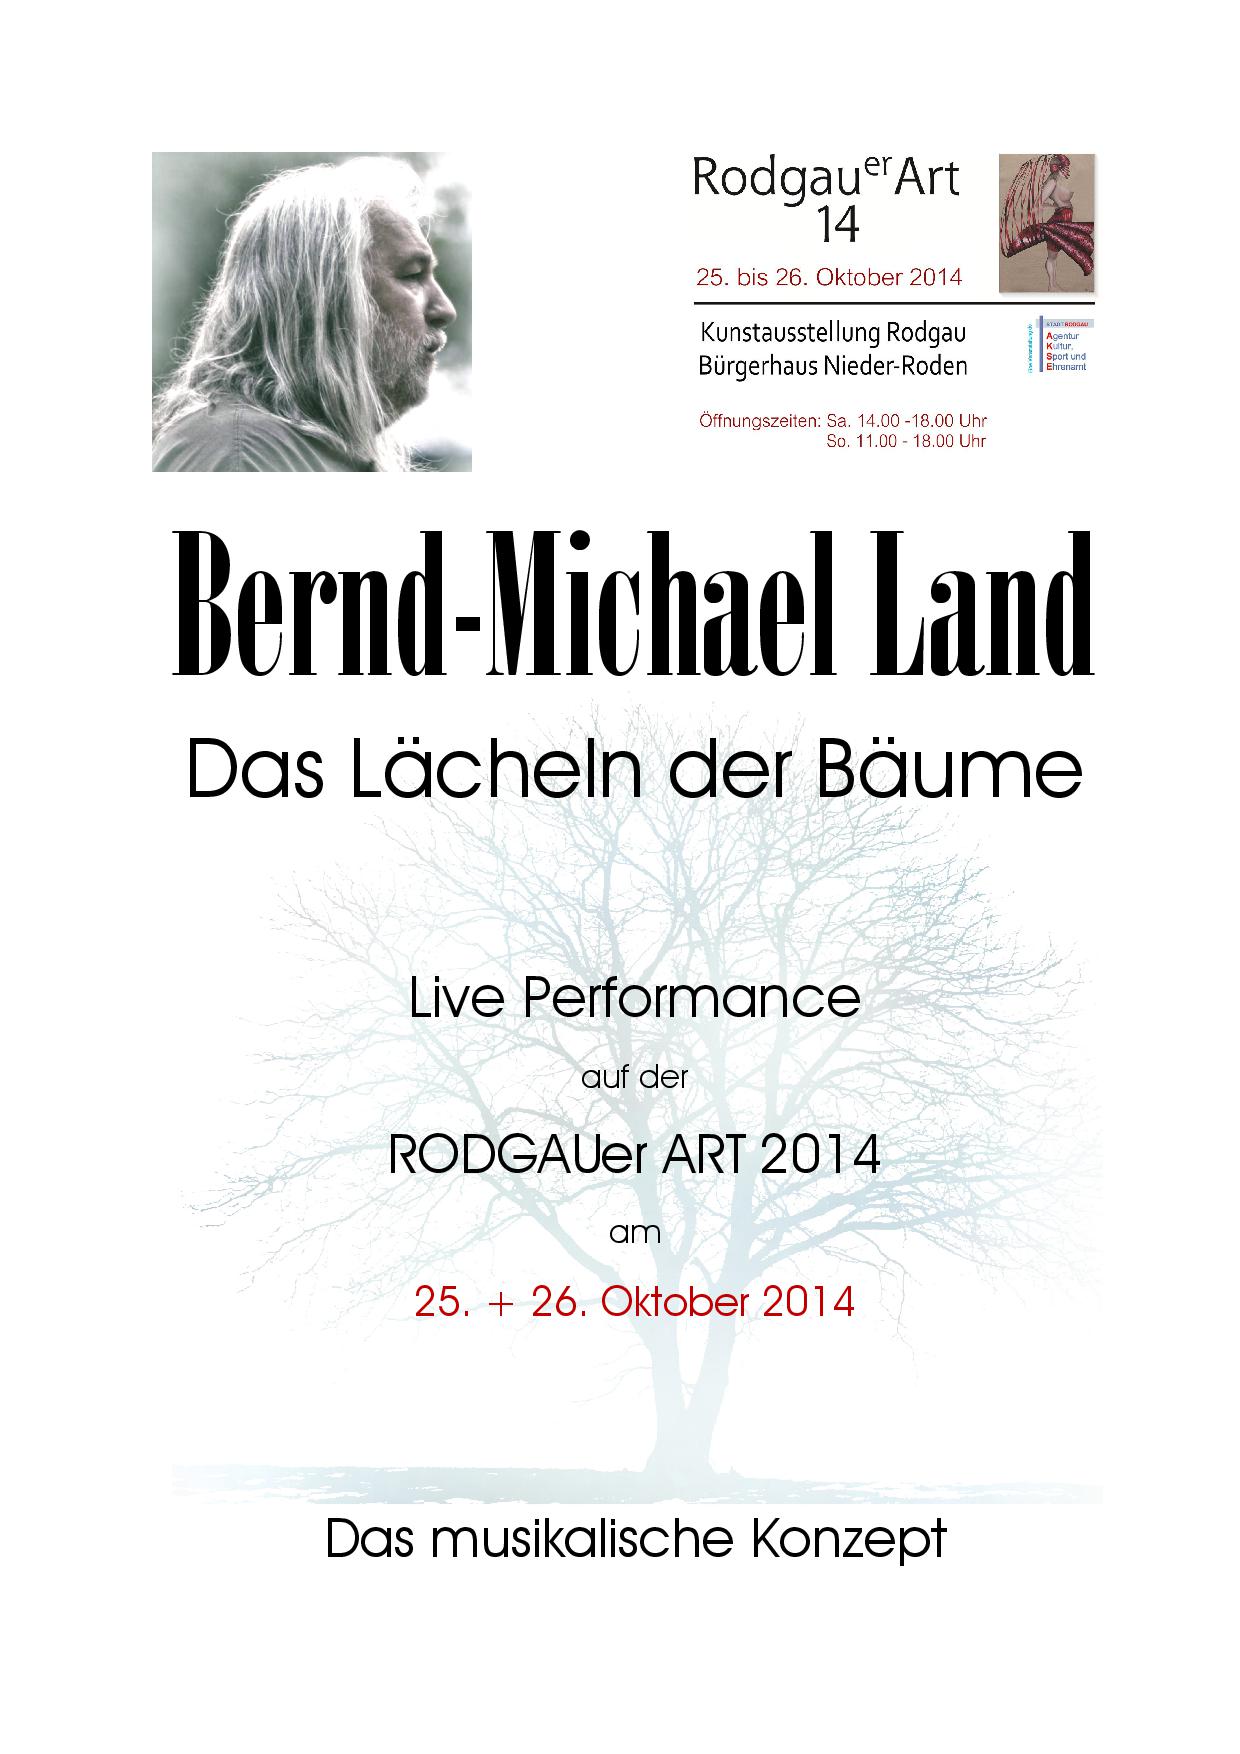 Bernd-Michael-Land-Vitae+more-001